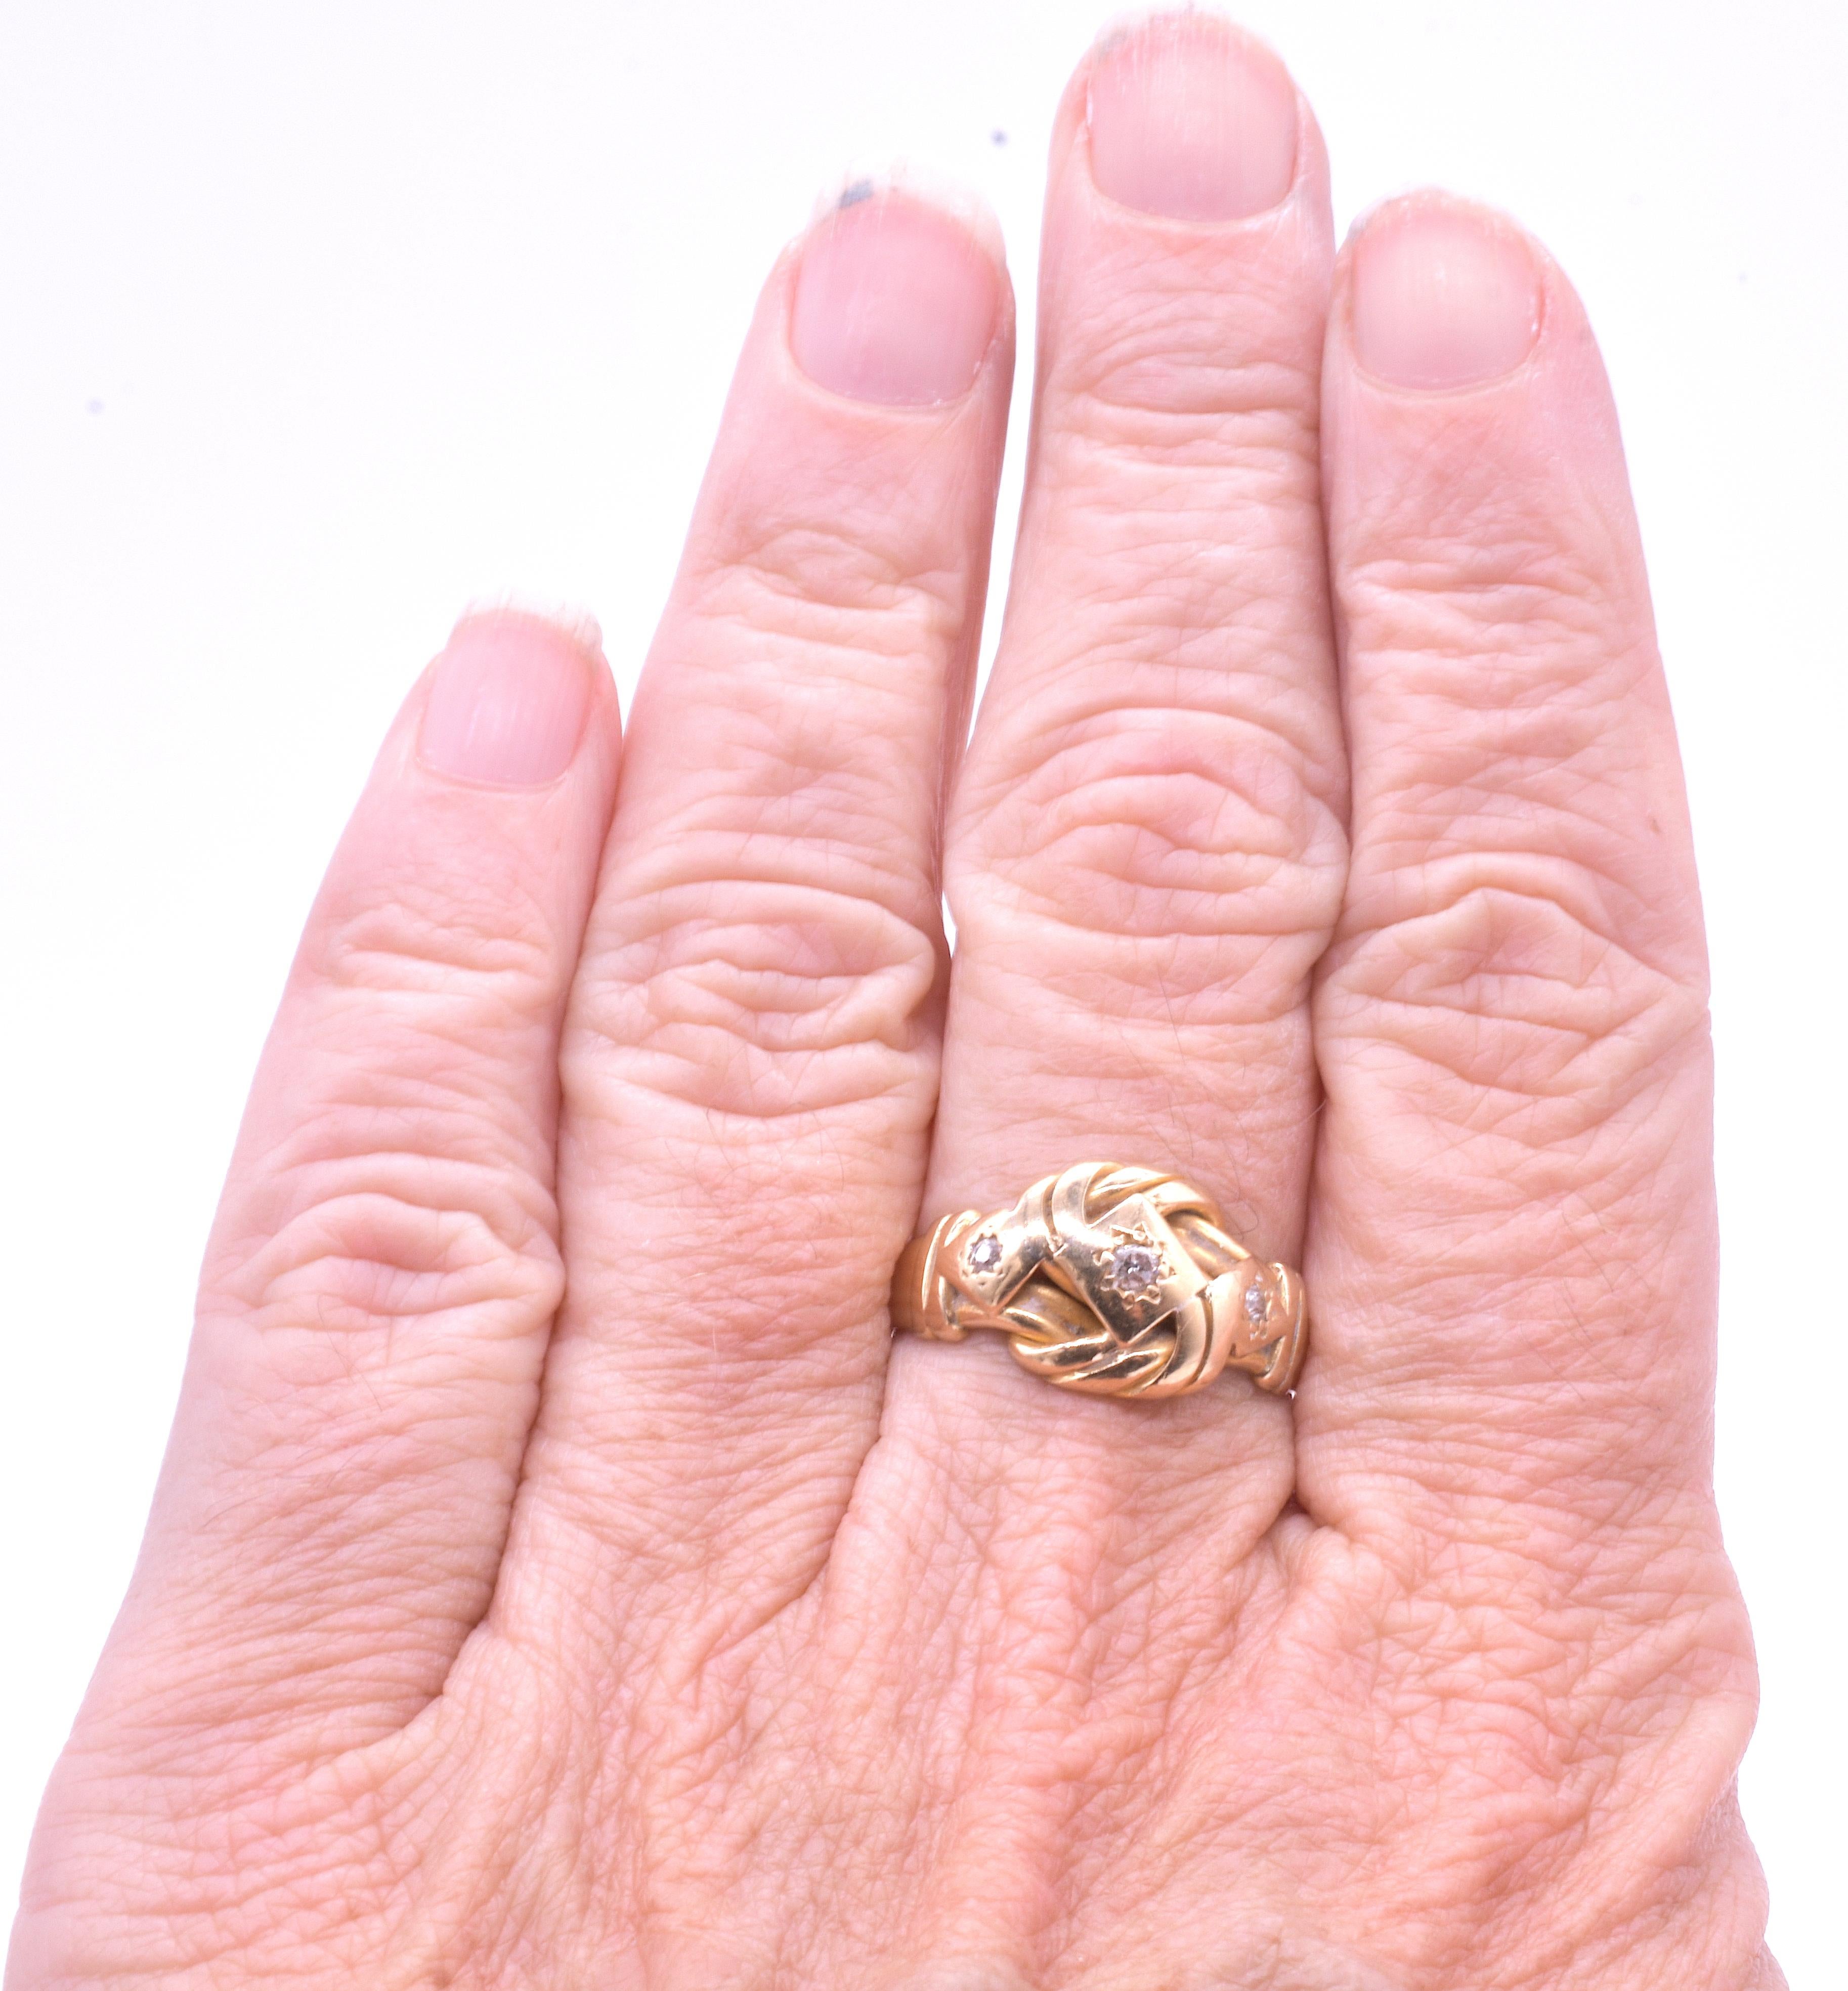 Late Victorian Antique 18 Karat Diamond Lover's Knot Ring, Hallmarked 1905 Birmingham 